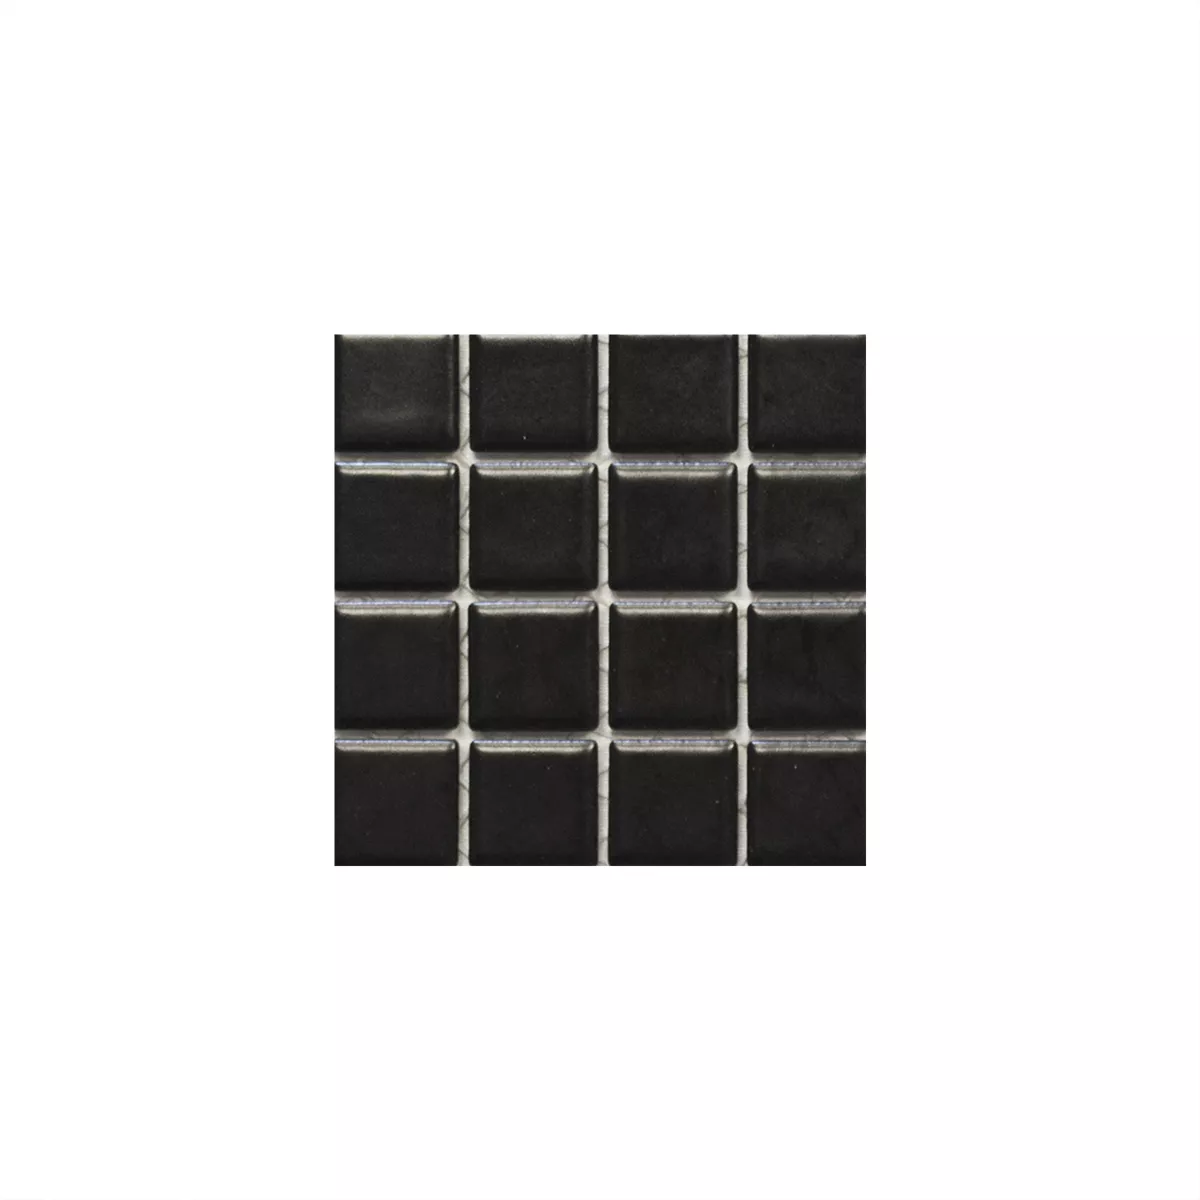 Sample Ceramic Mosaic Tiles Adrian Black Glossy Square 23